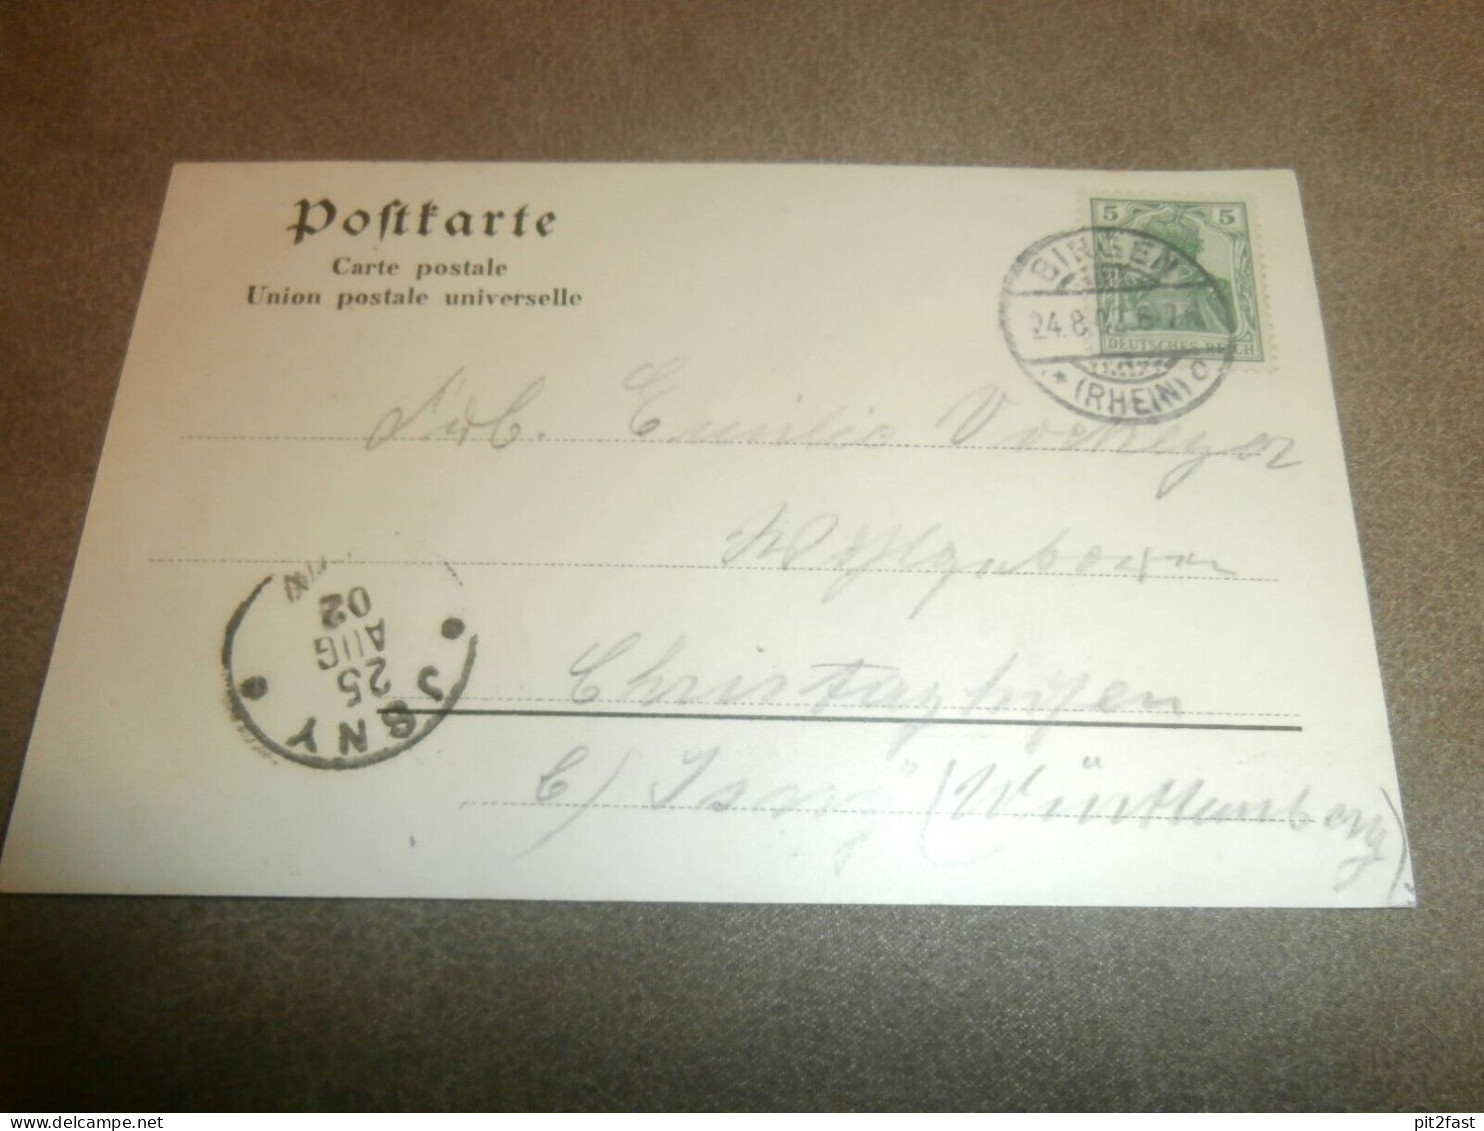 Bingen , Burg Klopp , 1902 , Alte Ansichtskarte , Postkarte !!! - Bingen